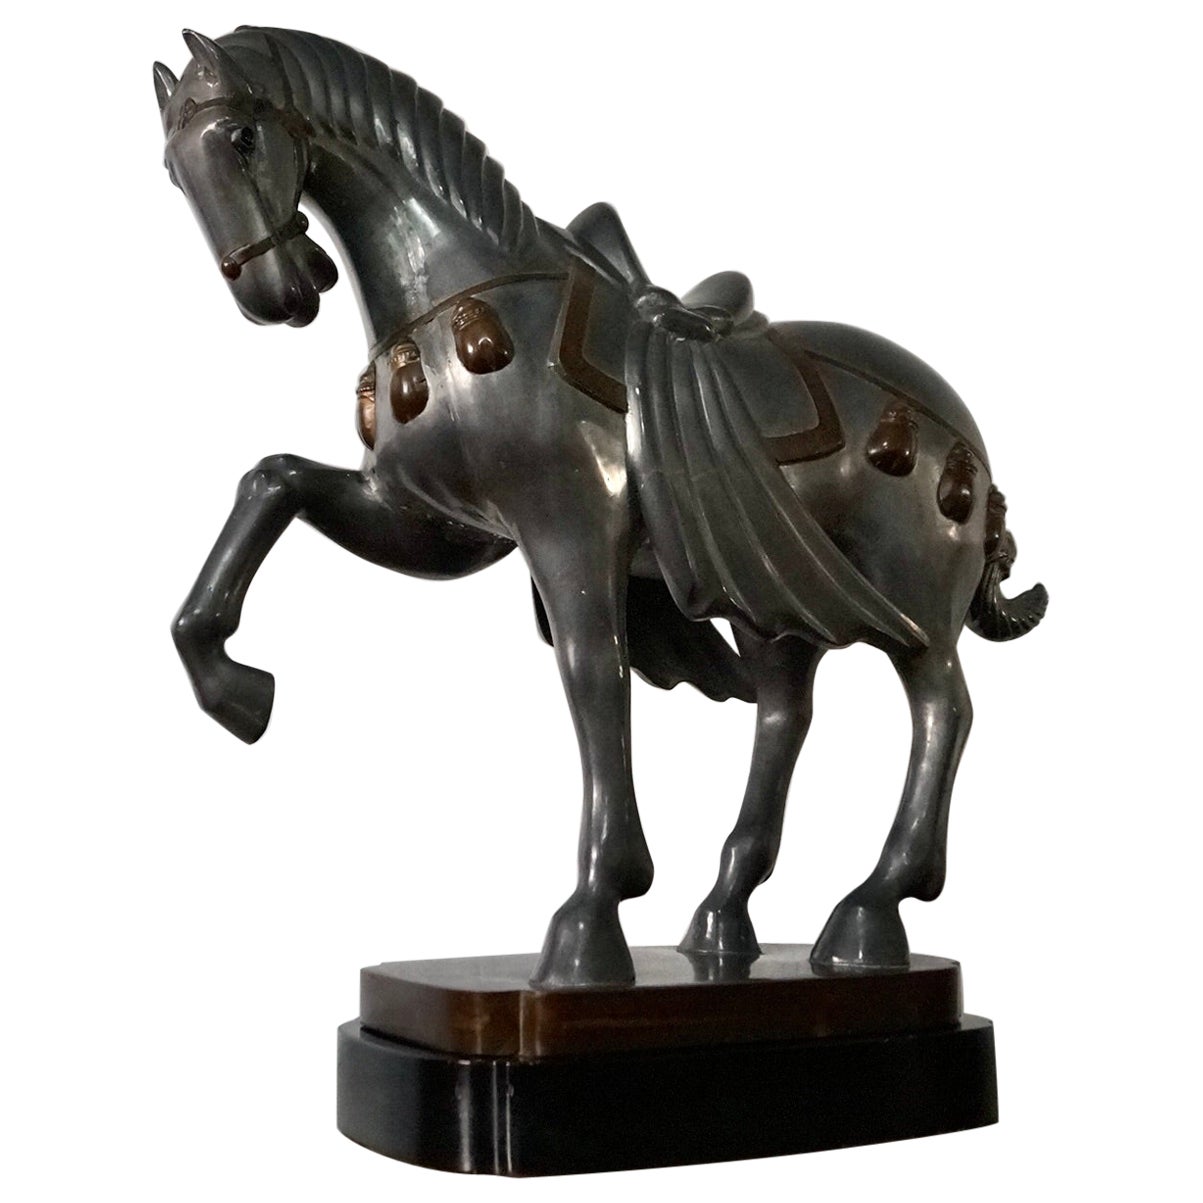 1940's Art Deco Pewter Horse Statue Sculpture For Sale